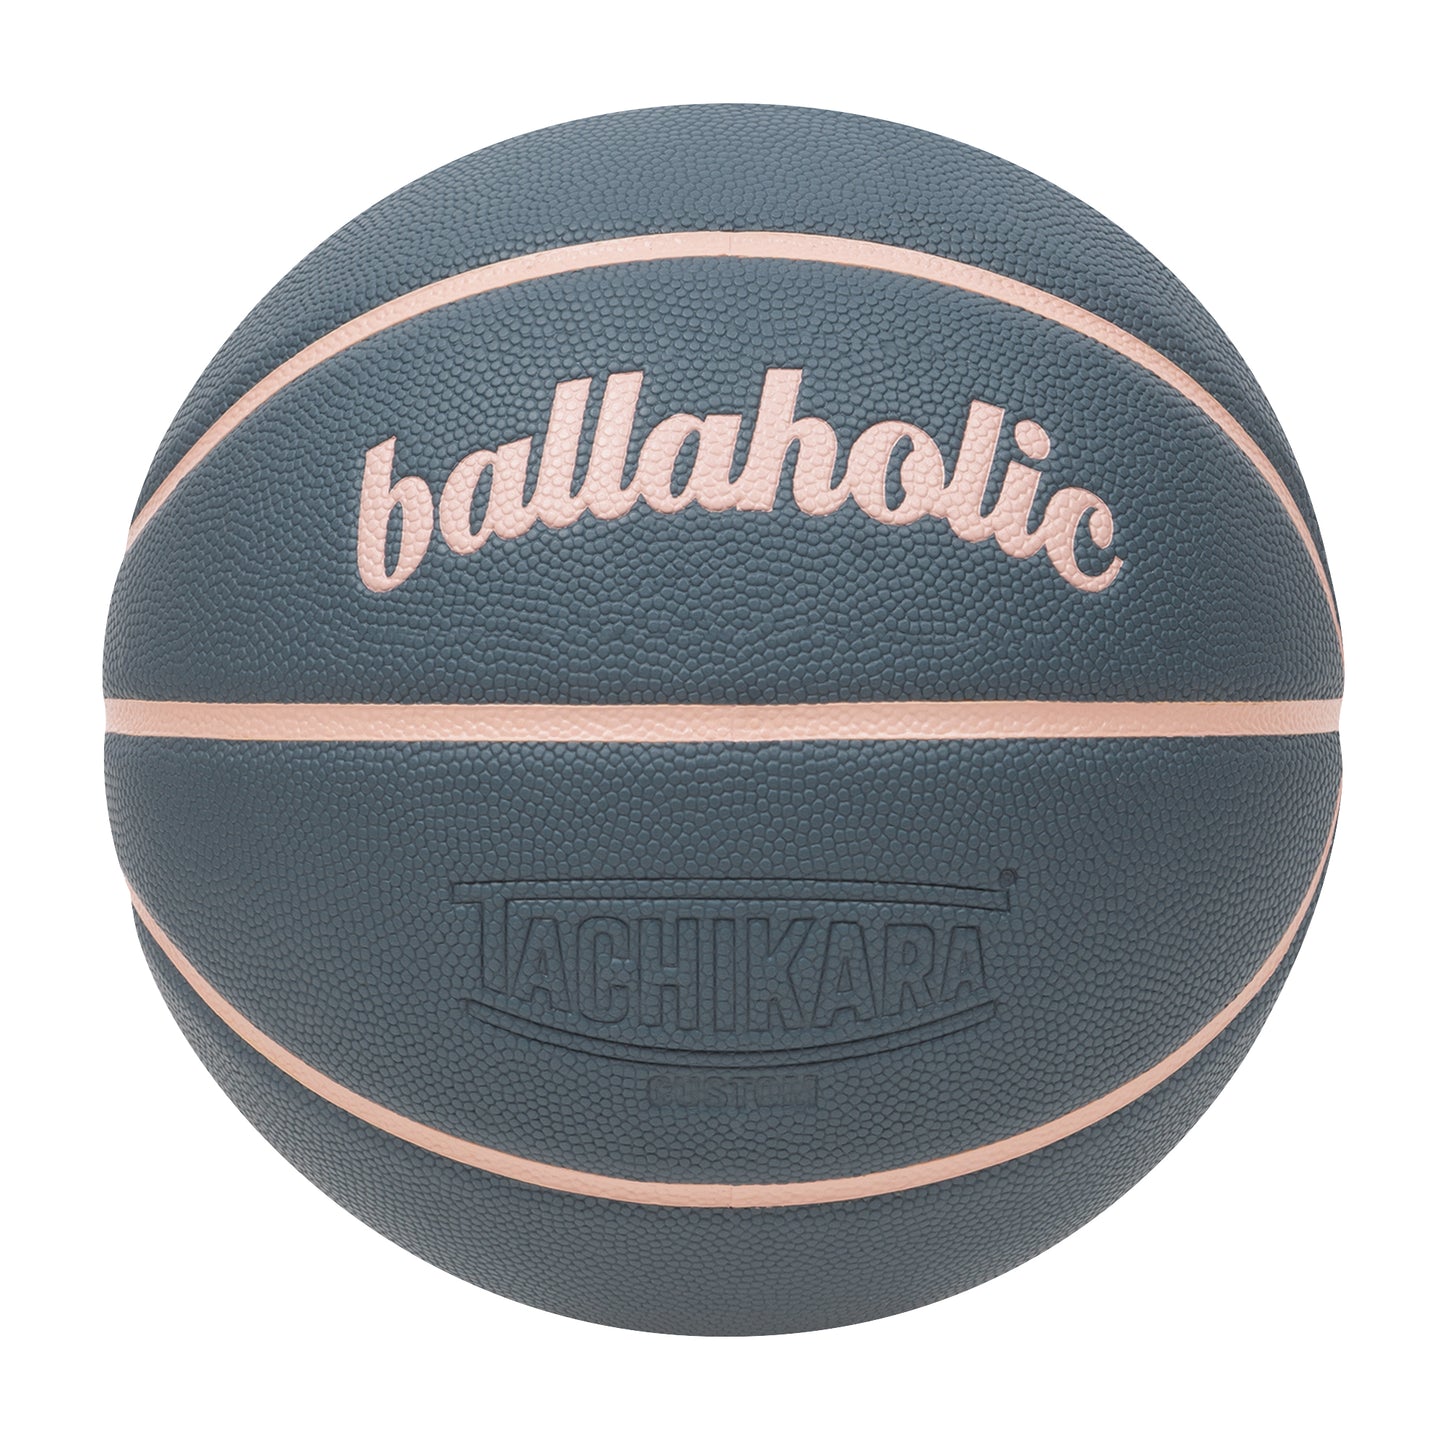 Playground Basketball / ballaholic x TACHIKARA (slate blue/pink) 7